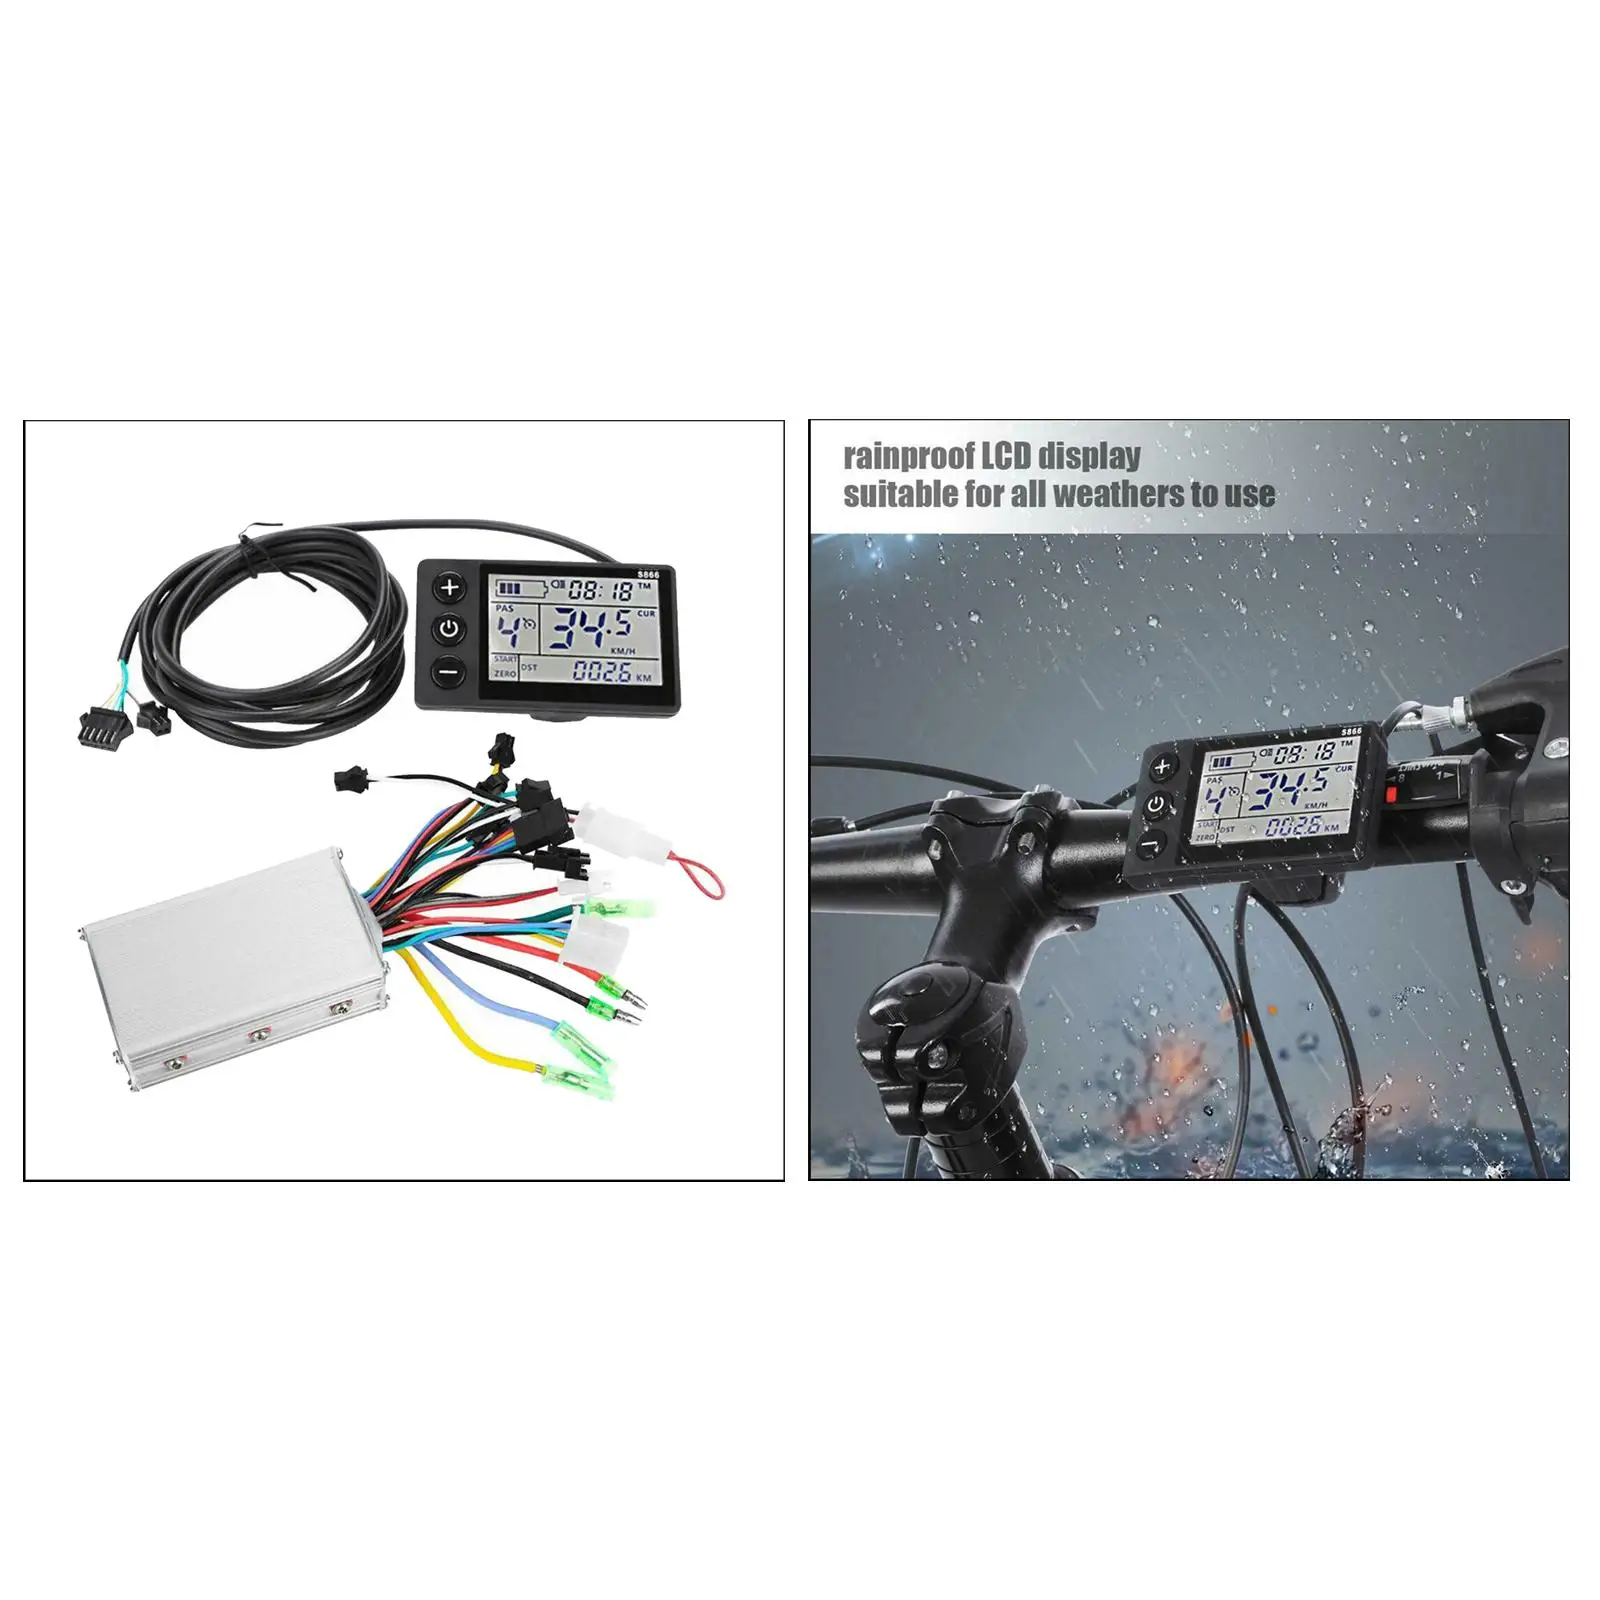  LCD Display Meter, Bicycle Computer Speedometer Odometer Backlight Large LCD Display, Electric Bicycle Scooter Meter